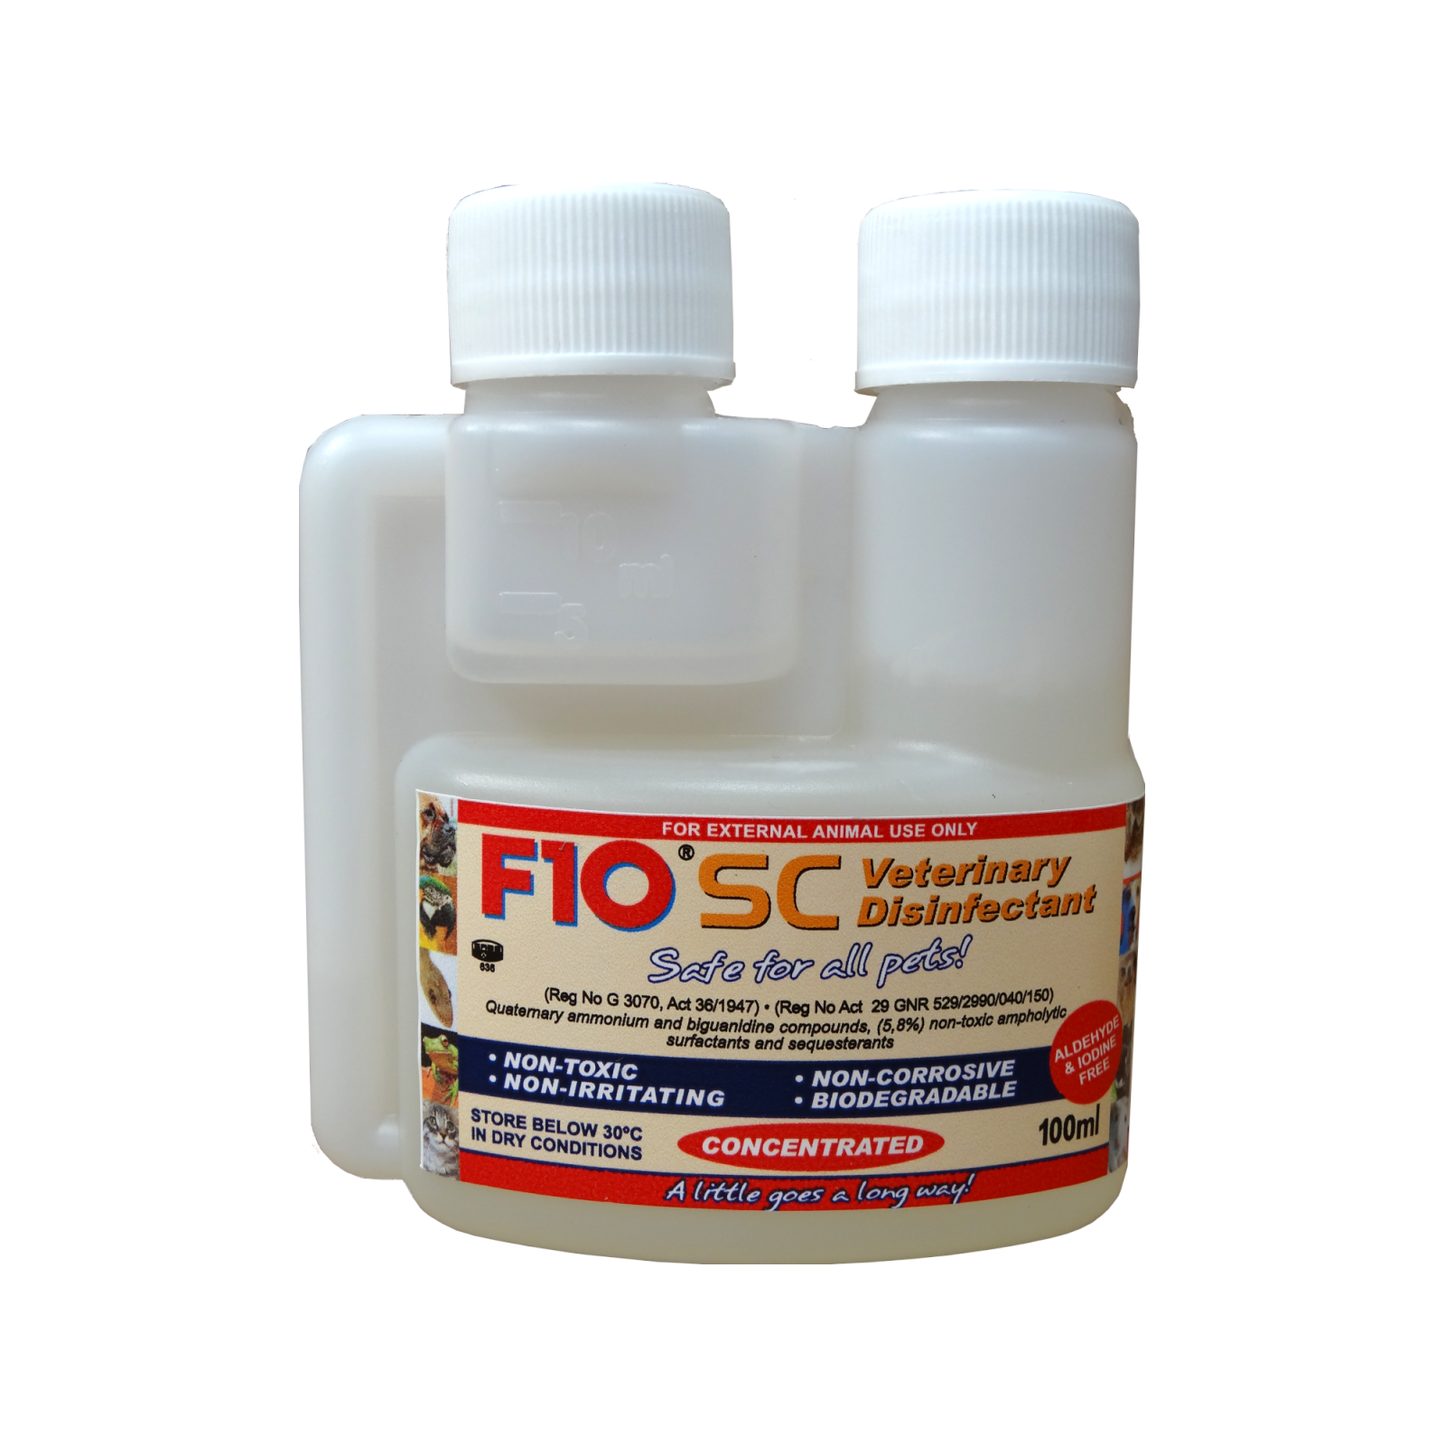 A 100ml bottle of F10SC Veterinary Disinfectant